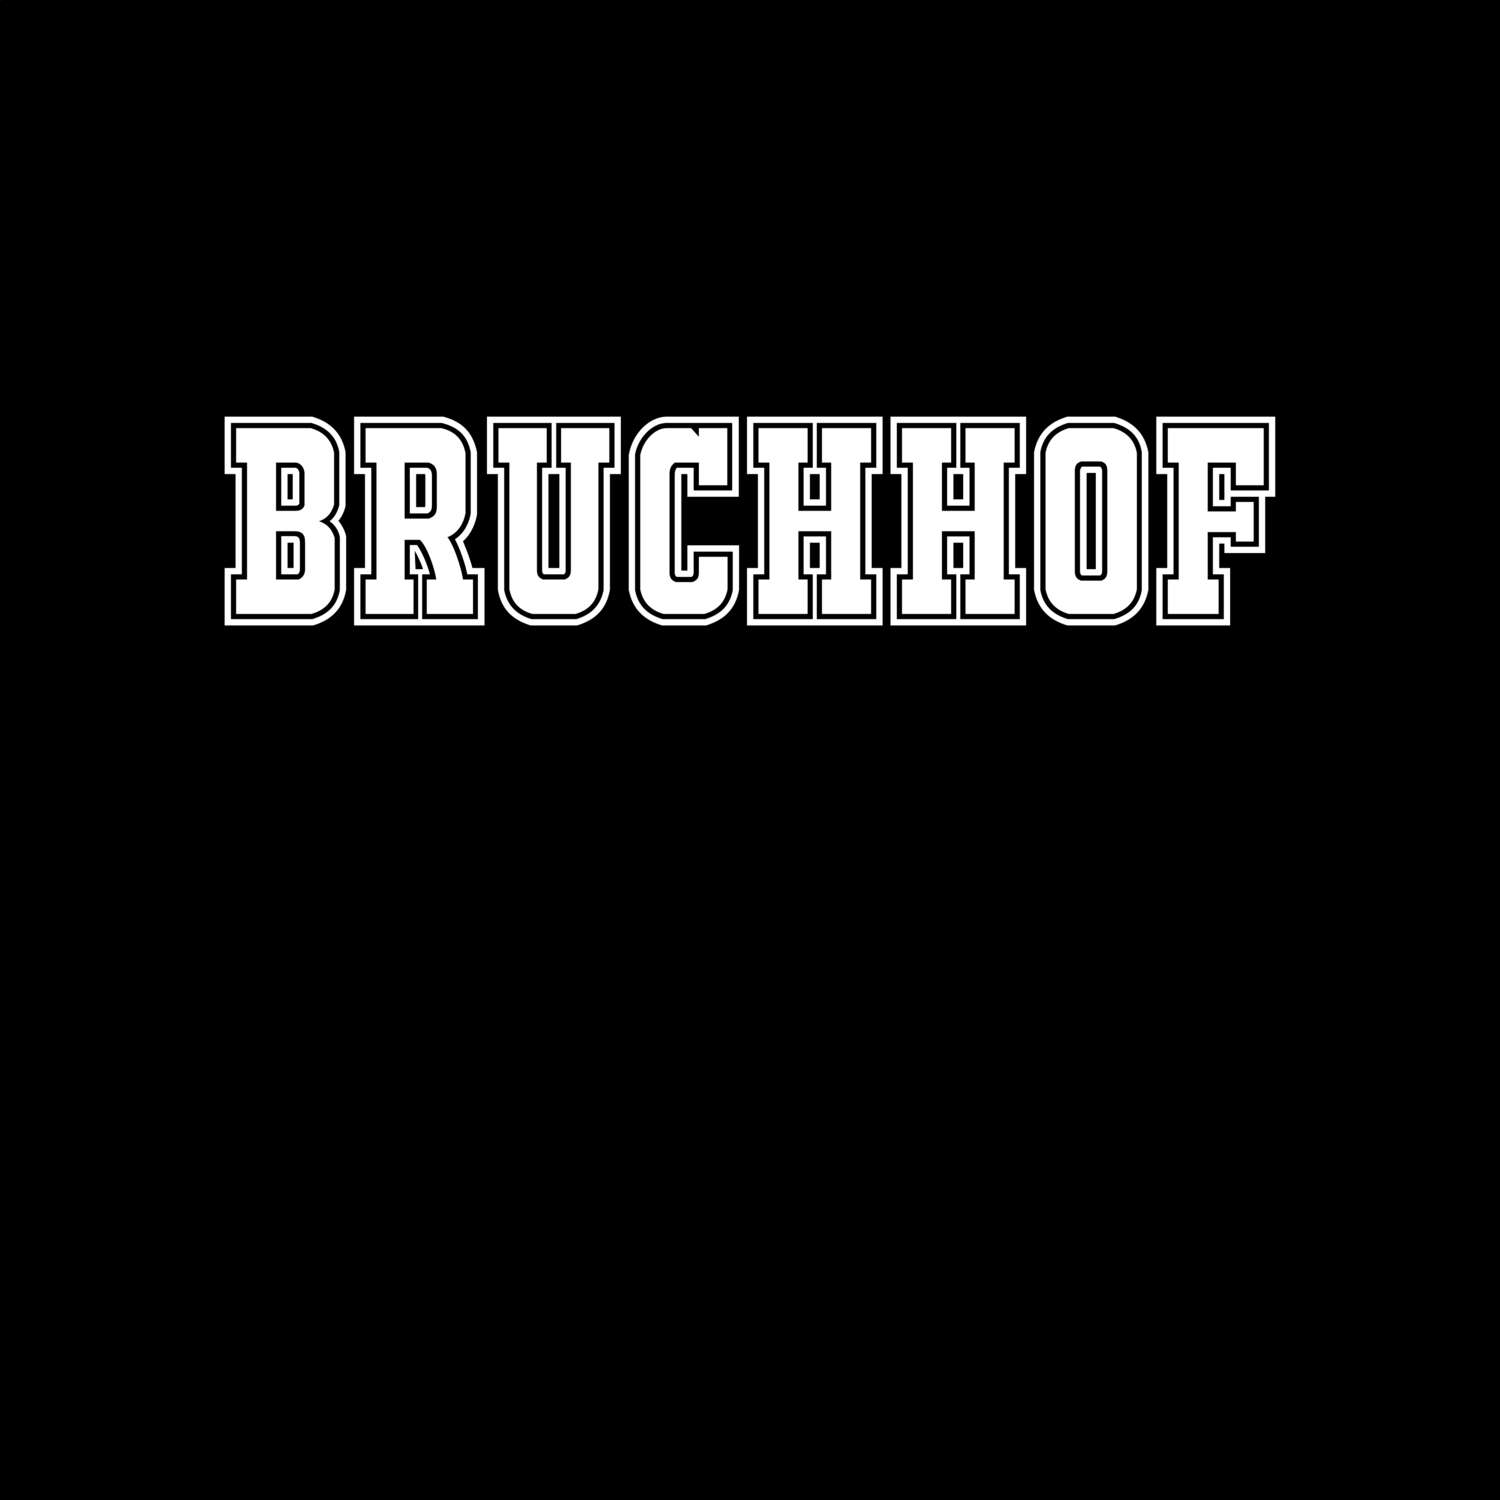 Bruchhof T-Shirt »Classic«